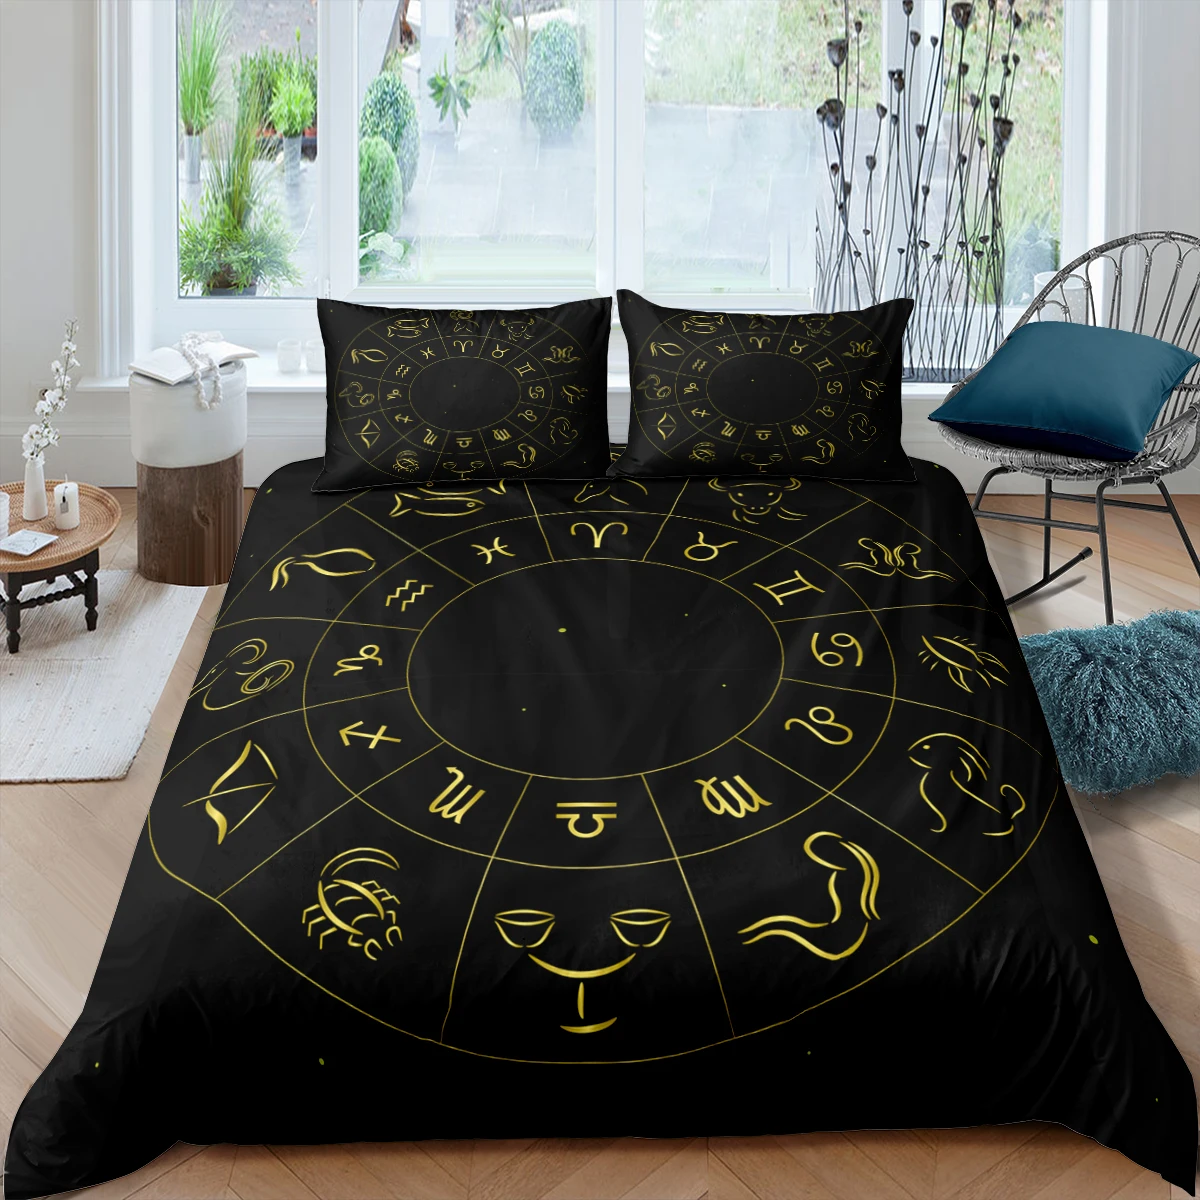 Home Textiles Luxury 3D Tarot Duvet Cover Set Pillowcase Constellation Bedding Set Queen and King Size Comforter Bedding Set